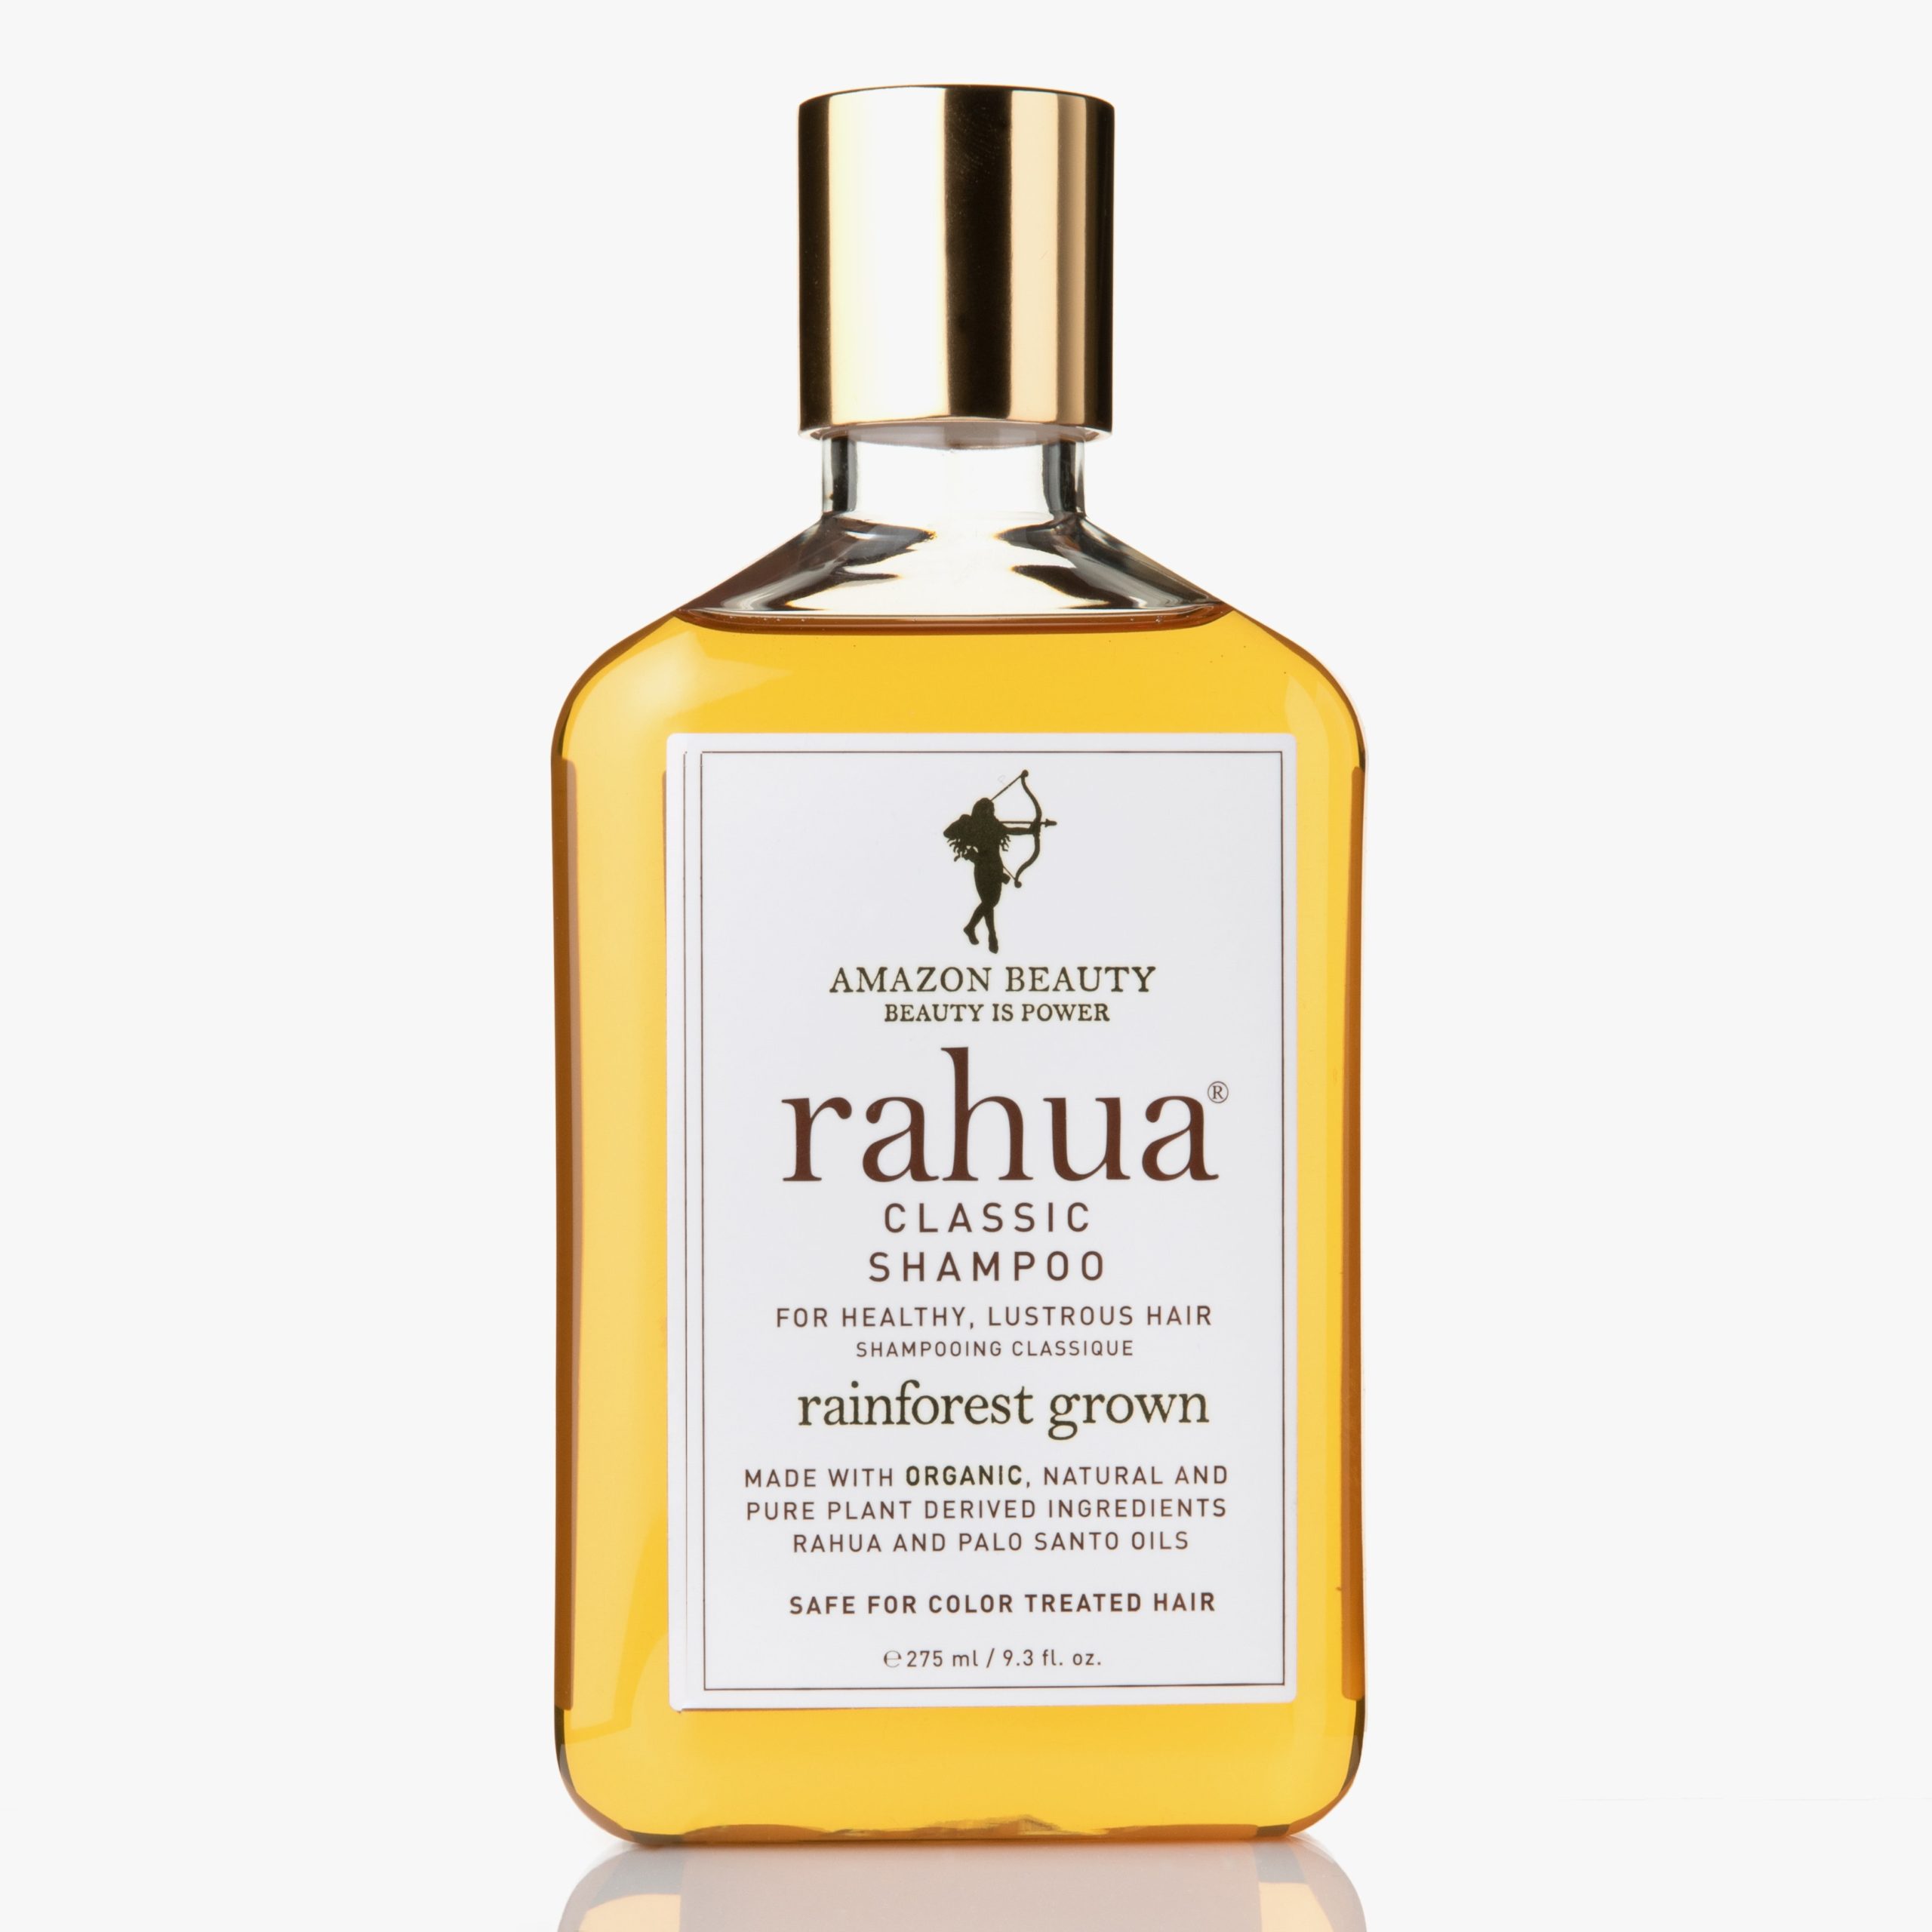 Rahua Classic Shampoo Works Wonders on My Dry, Sensitive Scalp: Review